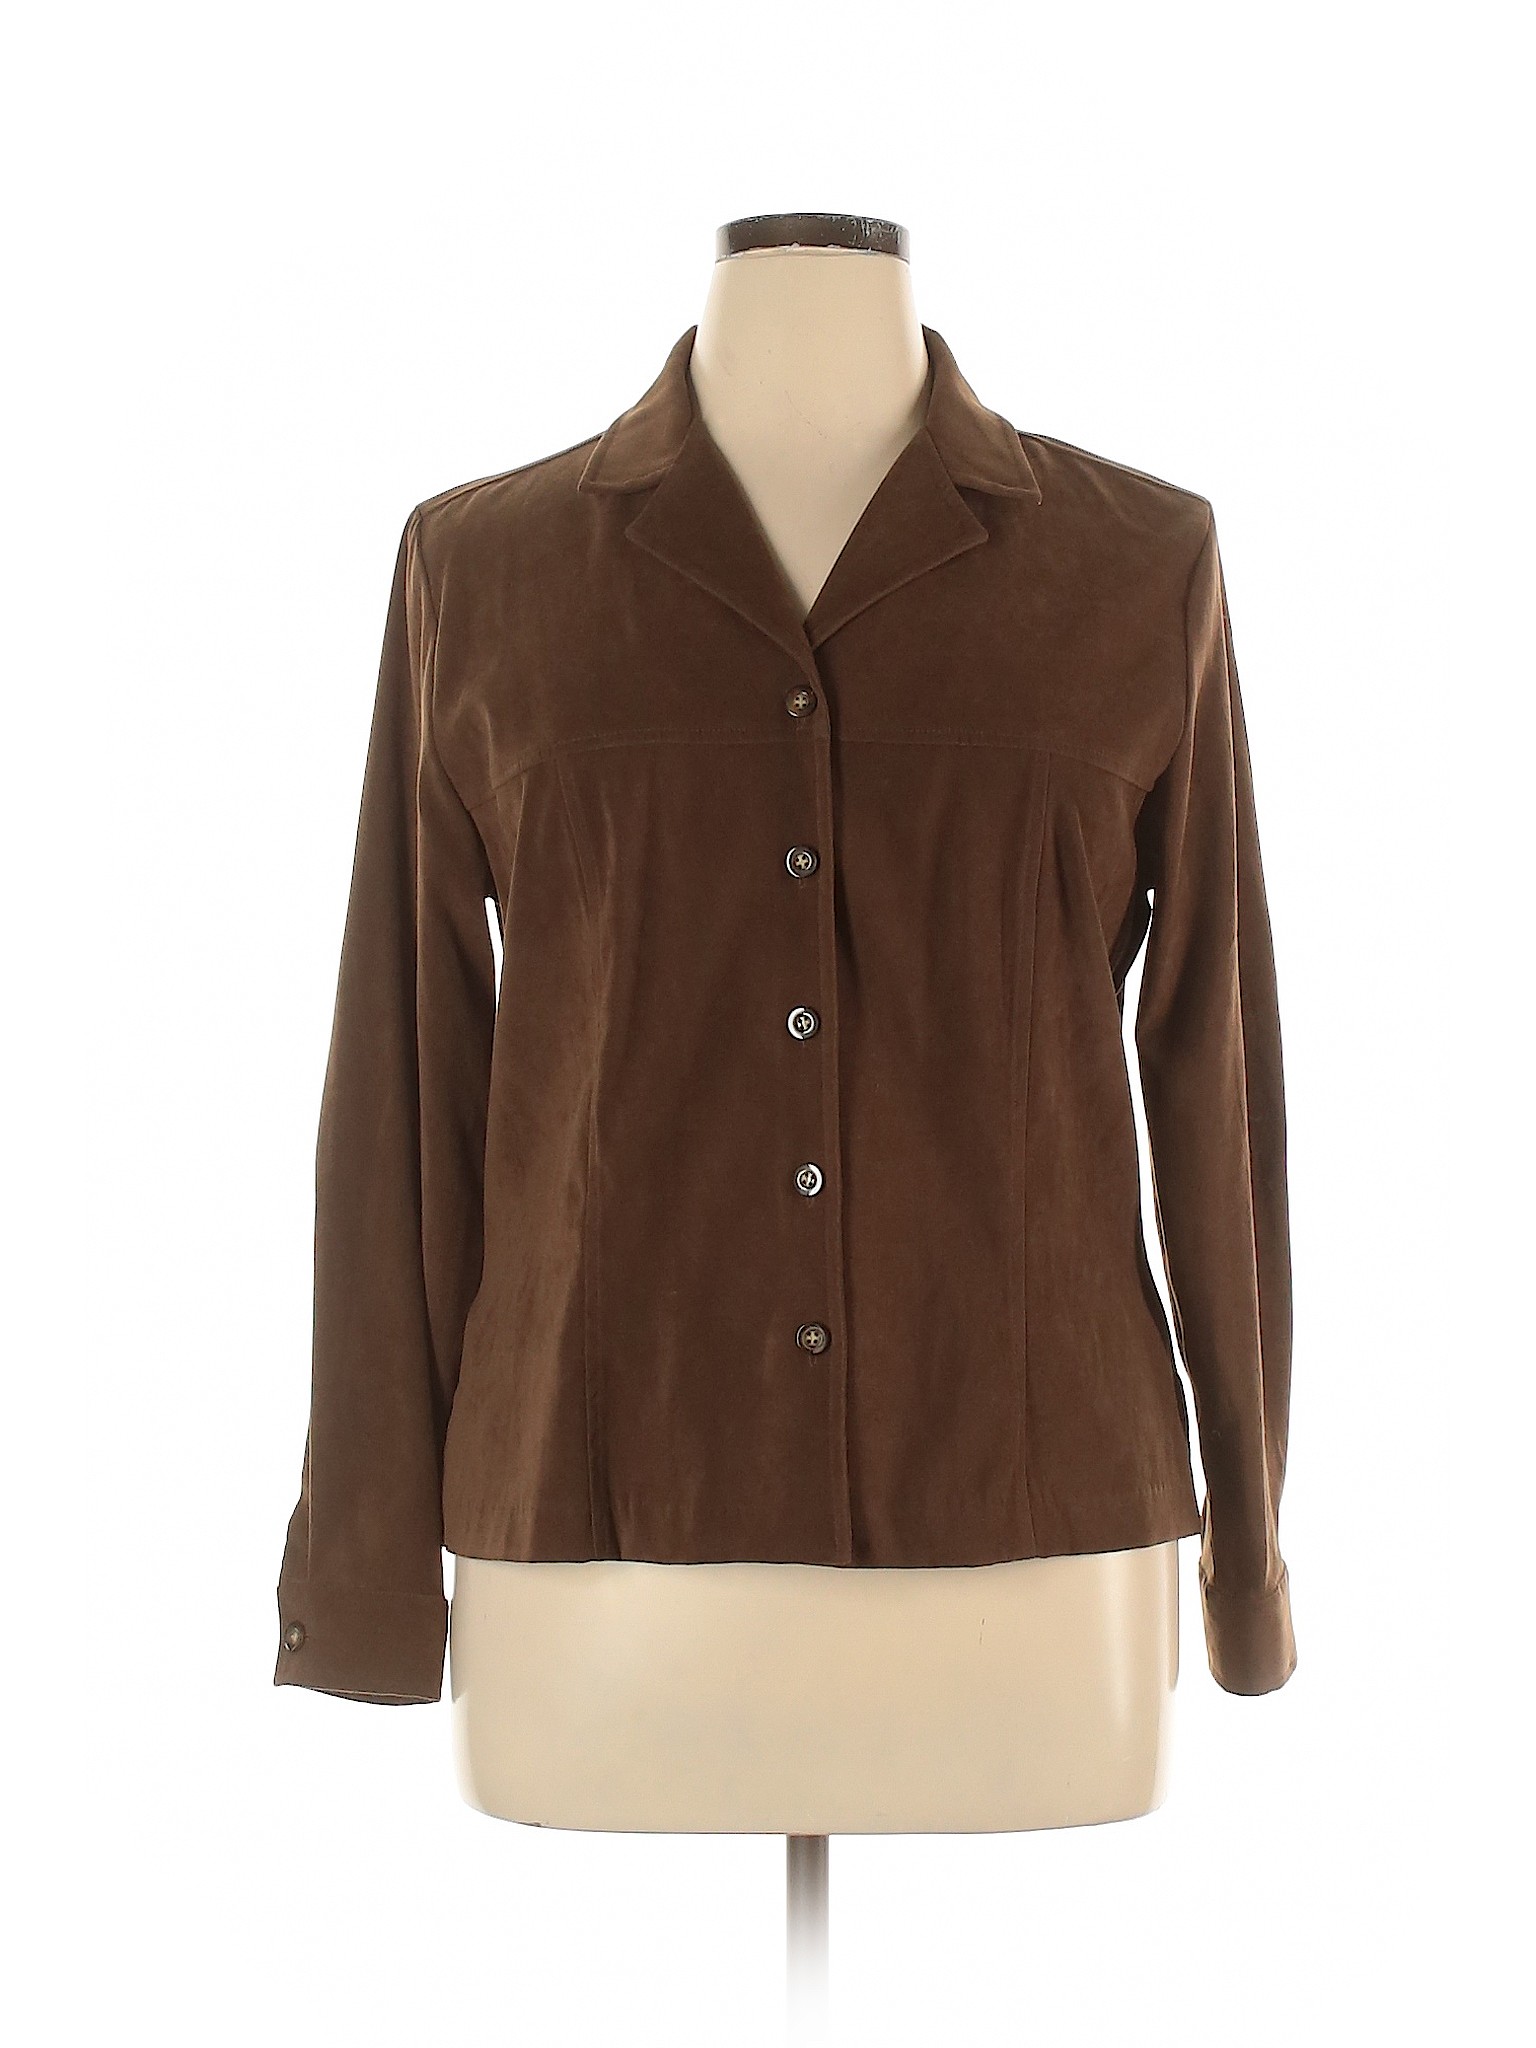 Sag Harbor Women Brown Jacket 14 Petites | eBay